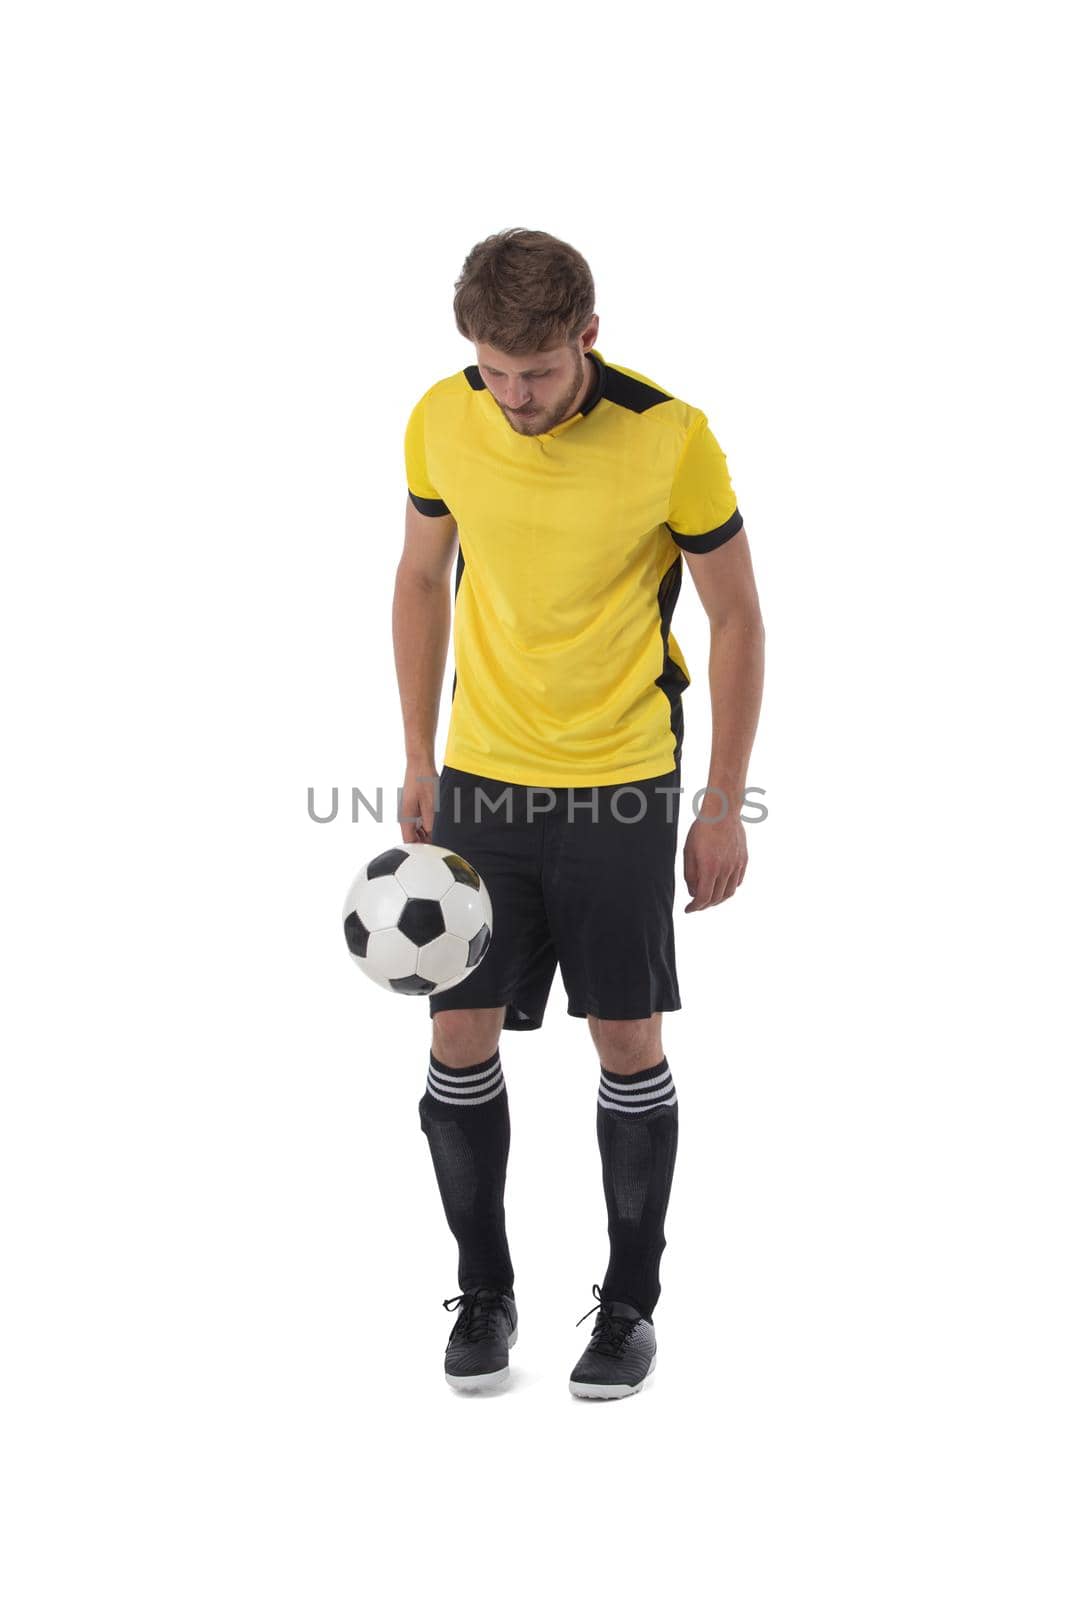 Soccer player kick ball by ALotOfPeople